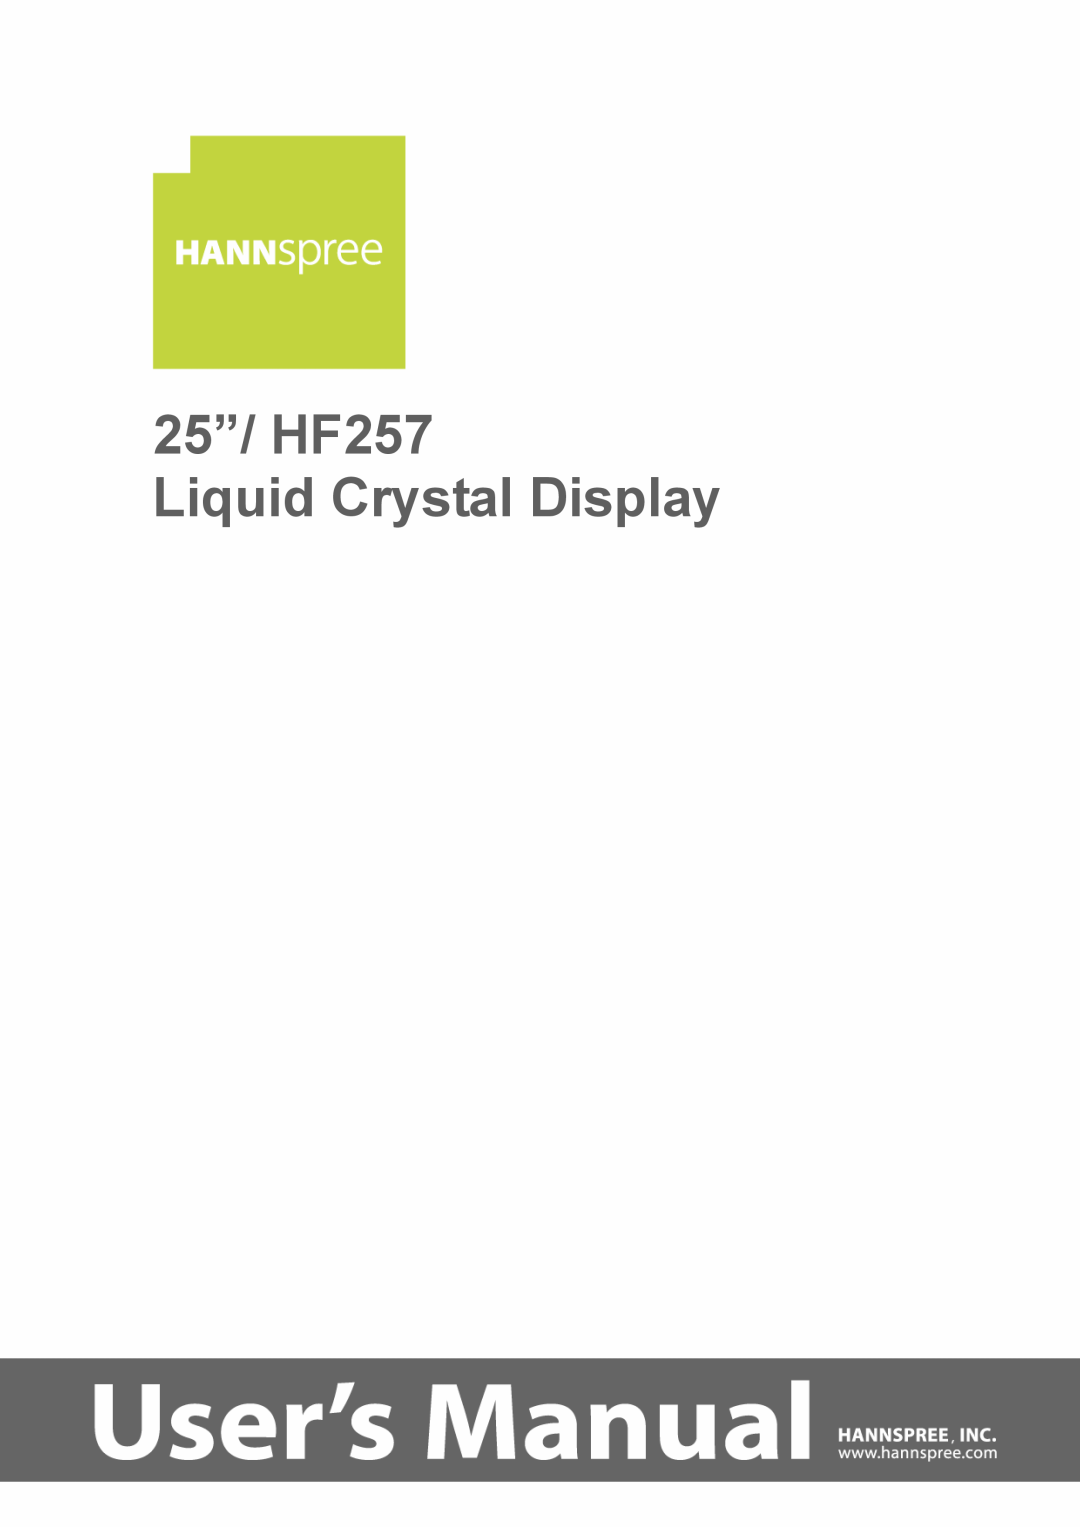 HANNspree manual 25”/ HF257 Liquid Crystal Display 